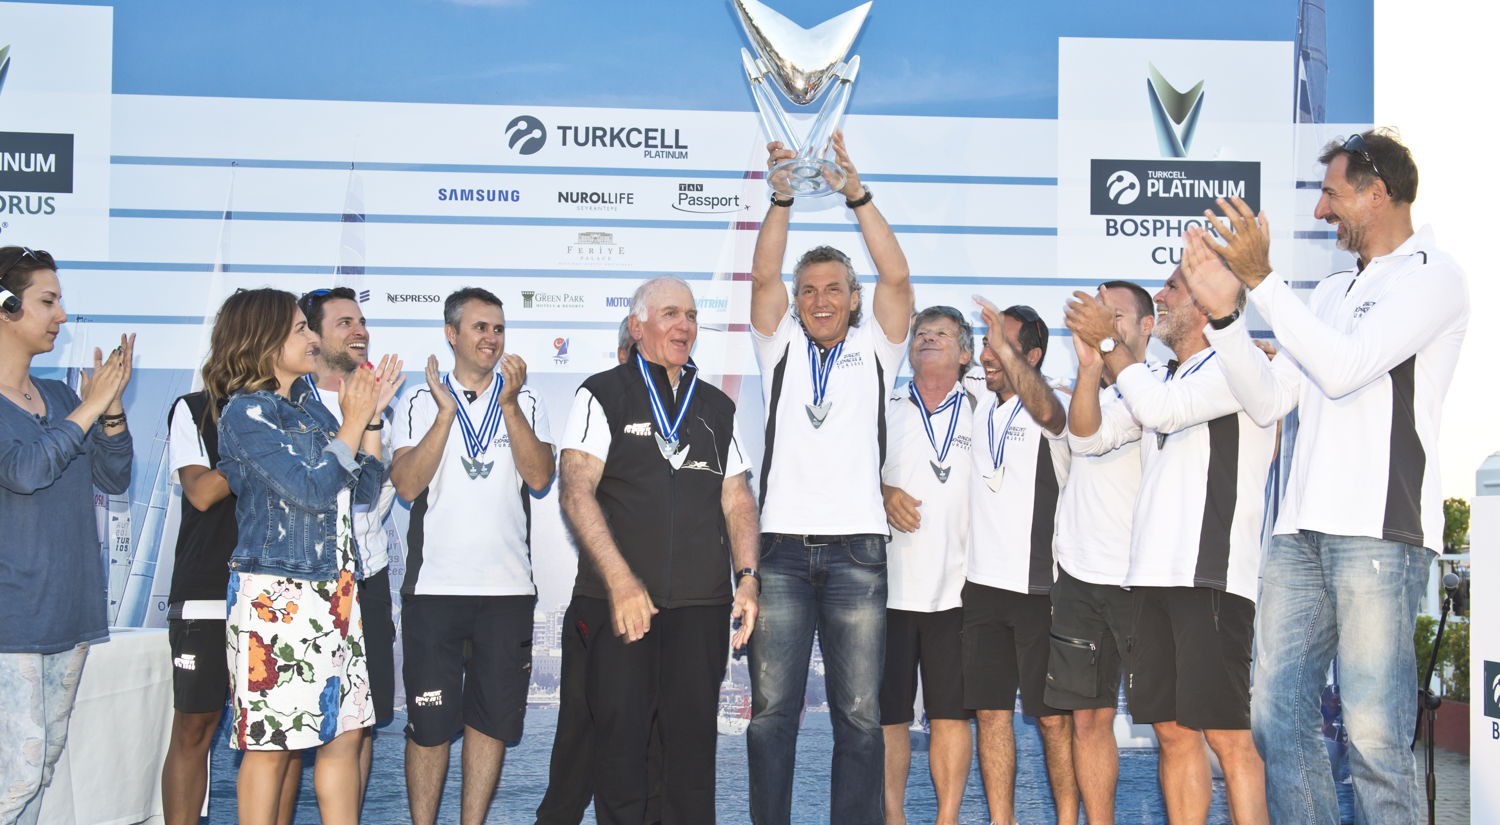 Orient Express VI, Bosphorus Cup overall winner 
Kurt Arrigo/Bosphorus Cup